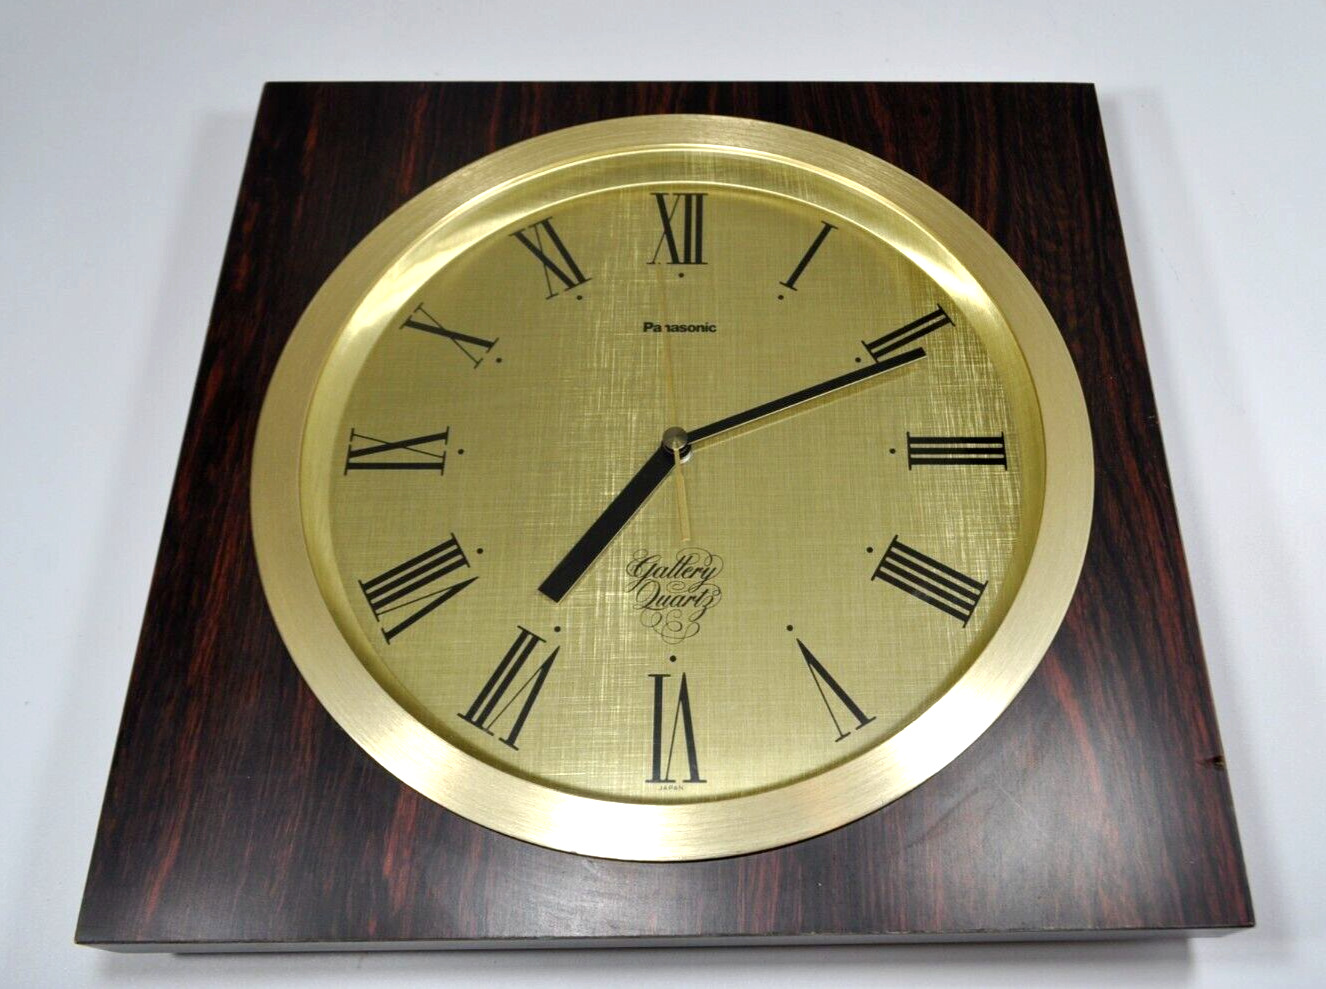 Vintage Panasonic Gallery Quartz Wood Wall Clock w Gold Face TF-605 #50604 Japan